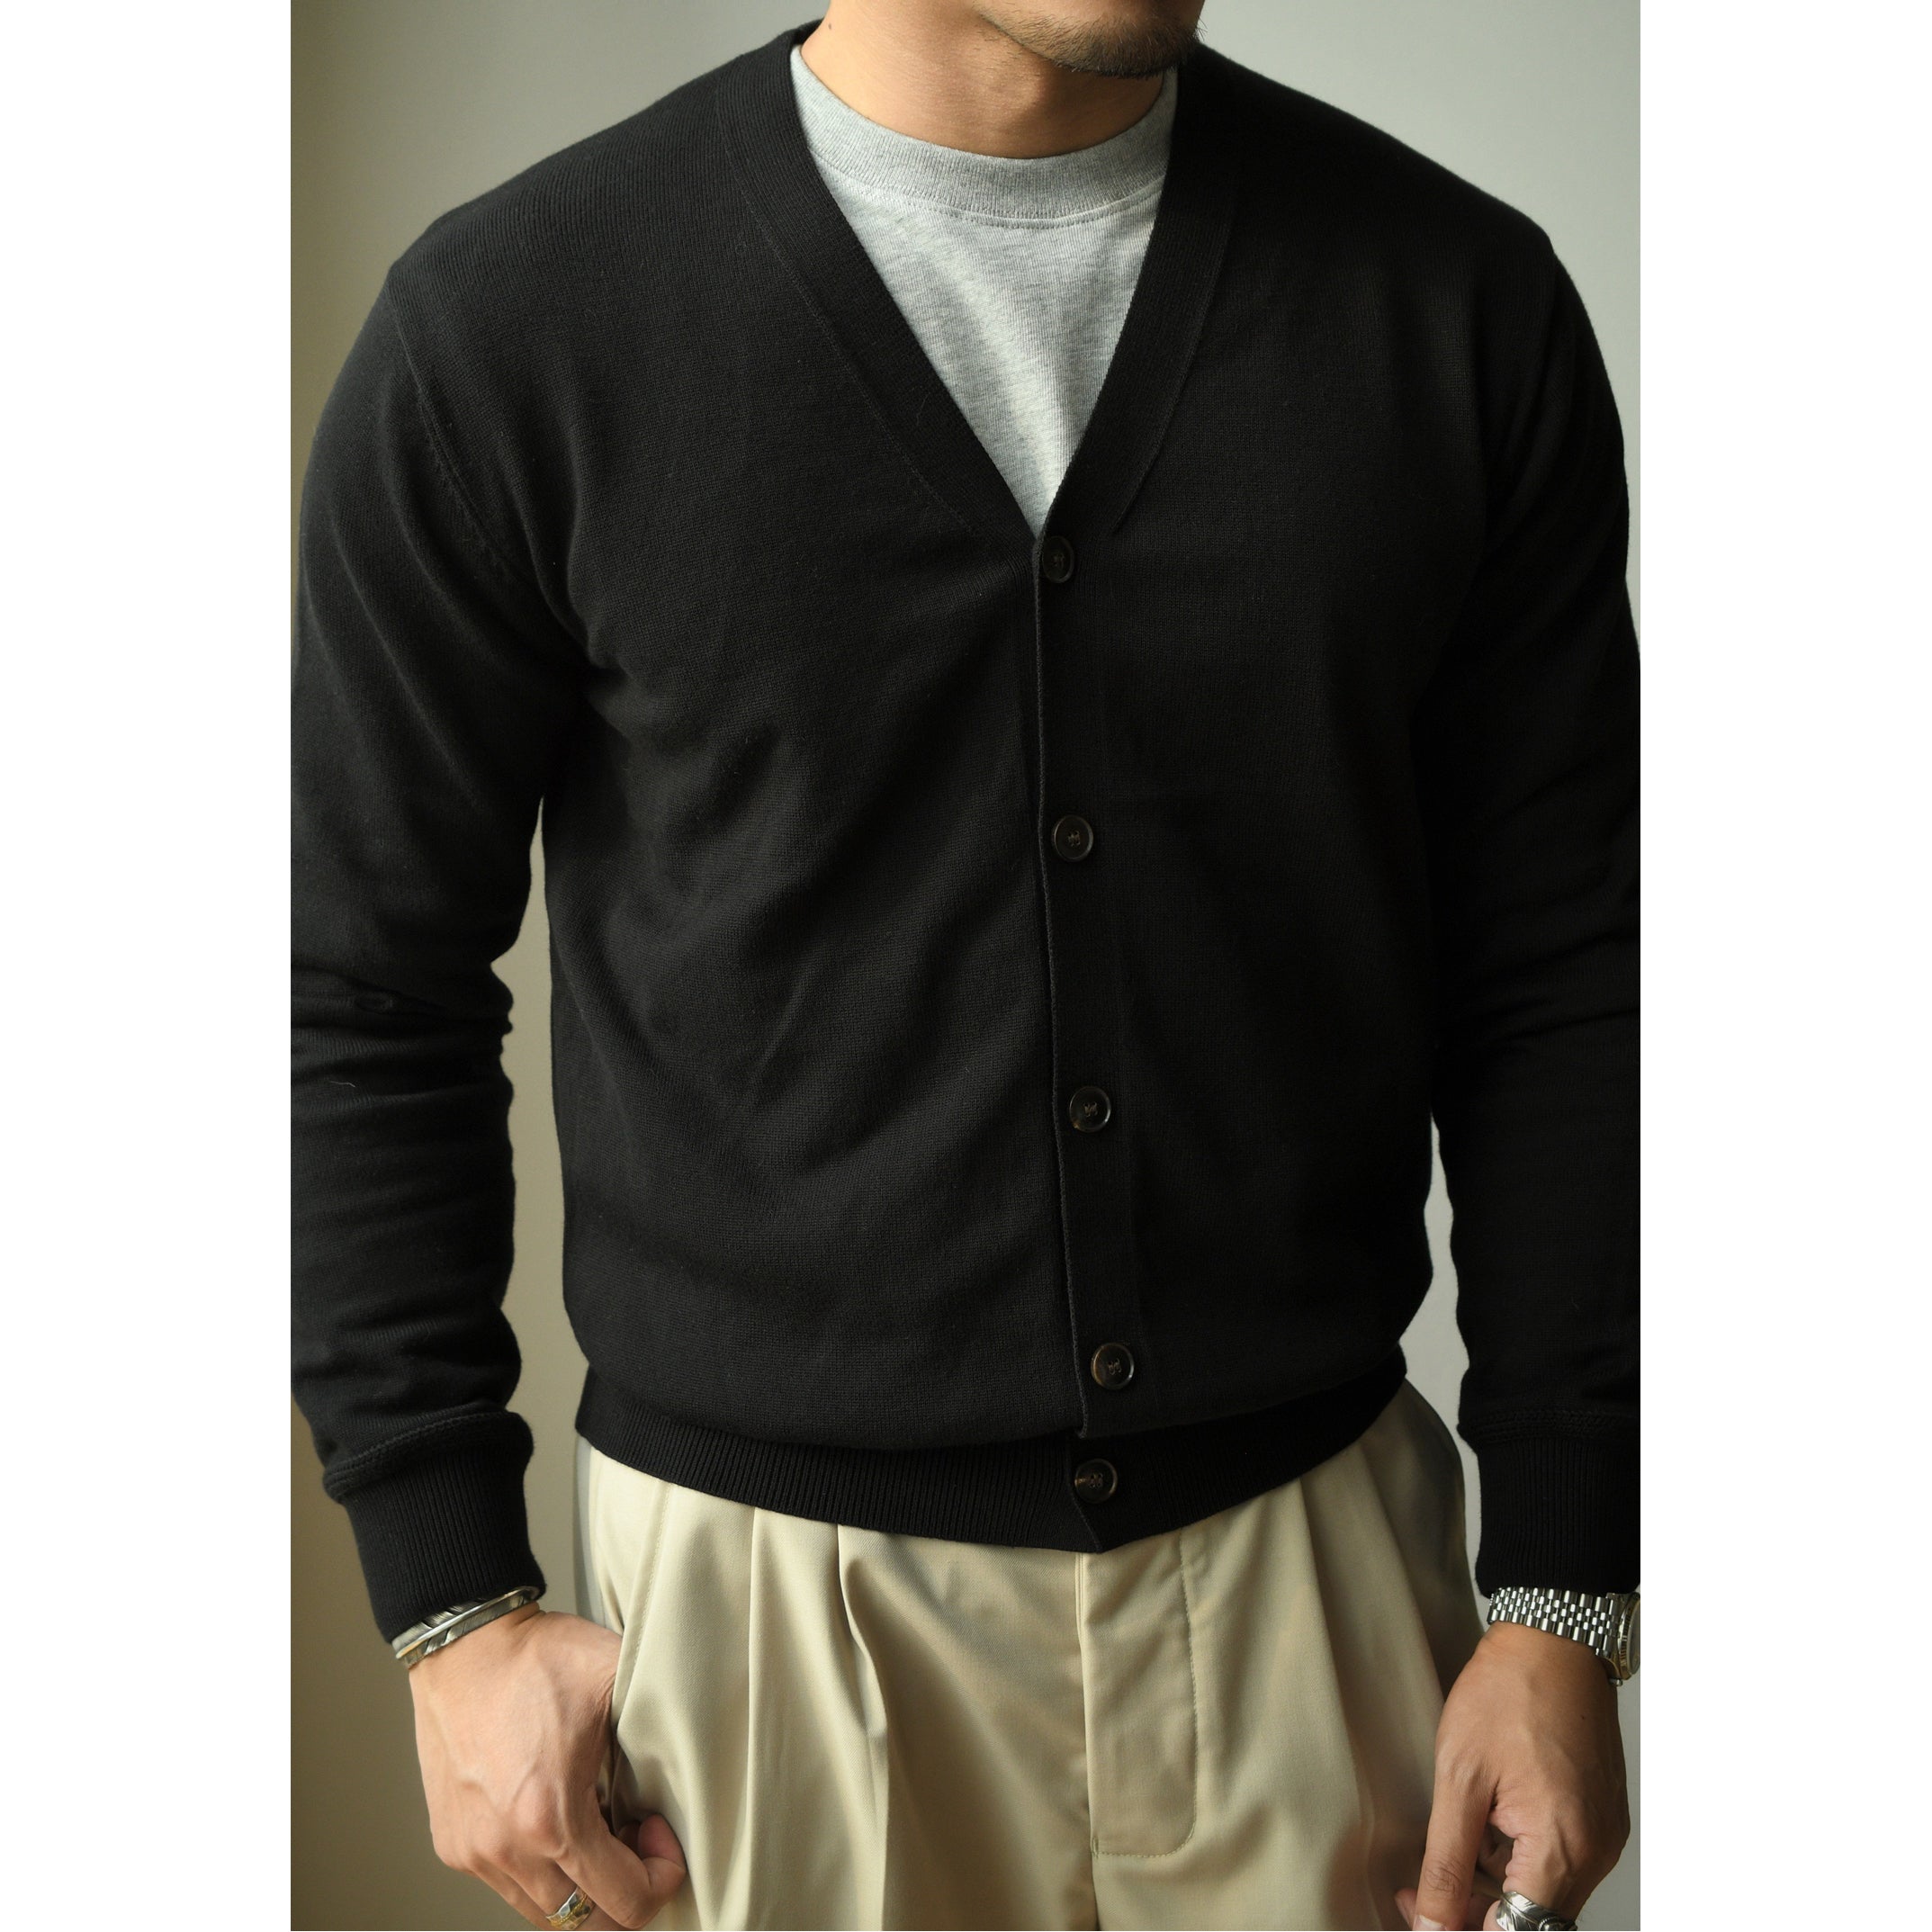 Retro Cotton Cardigan Long-sleeved Sweater Jacket